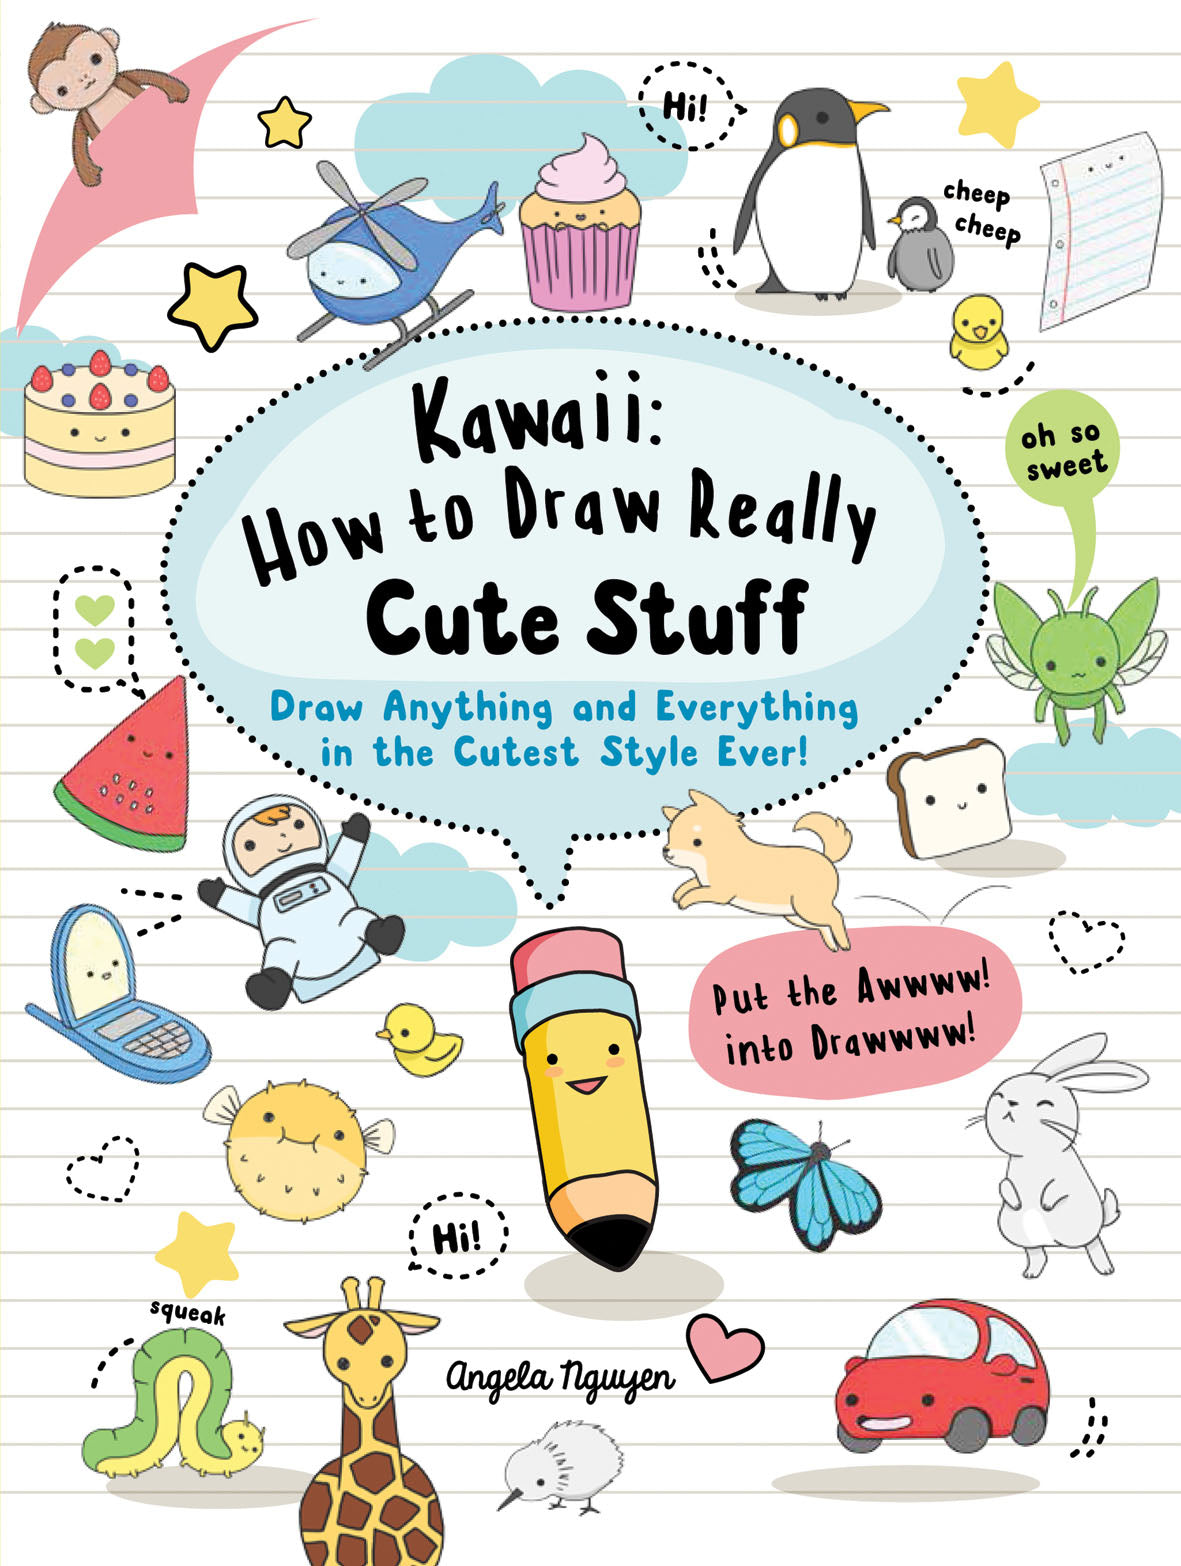 Kawaii: How to draw really cute stuff